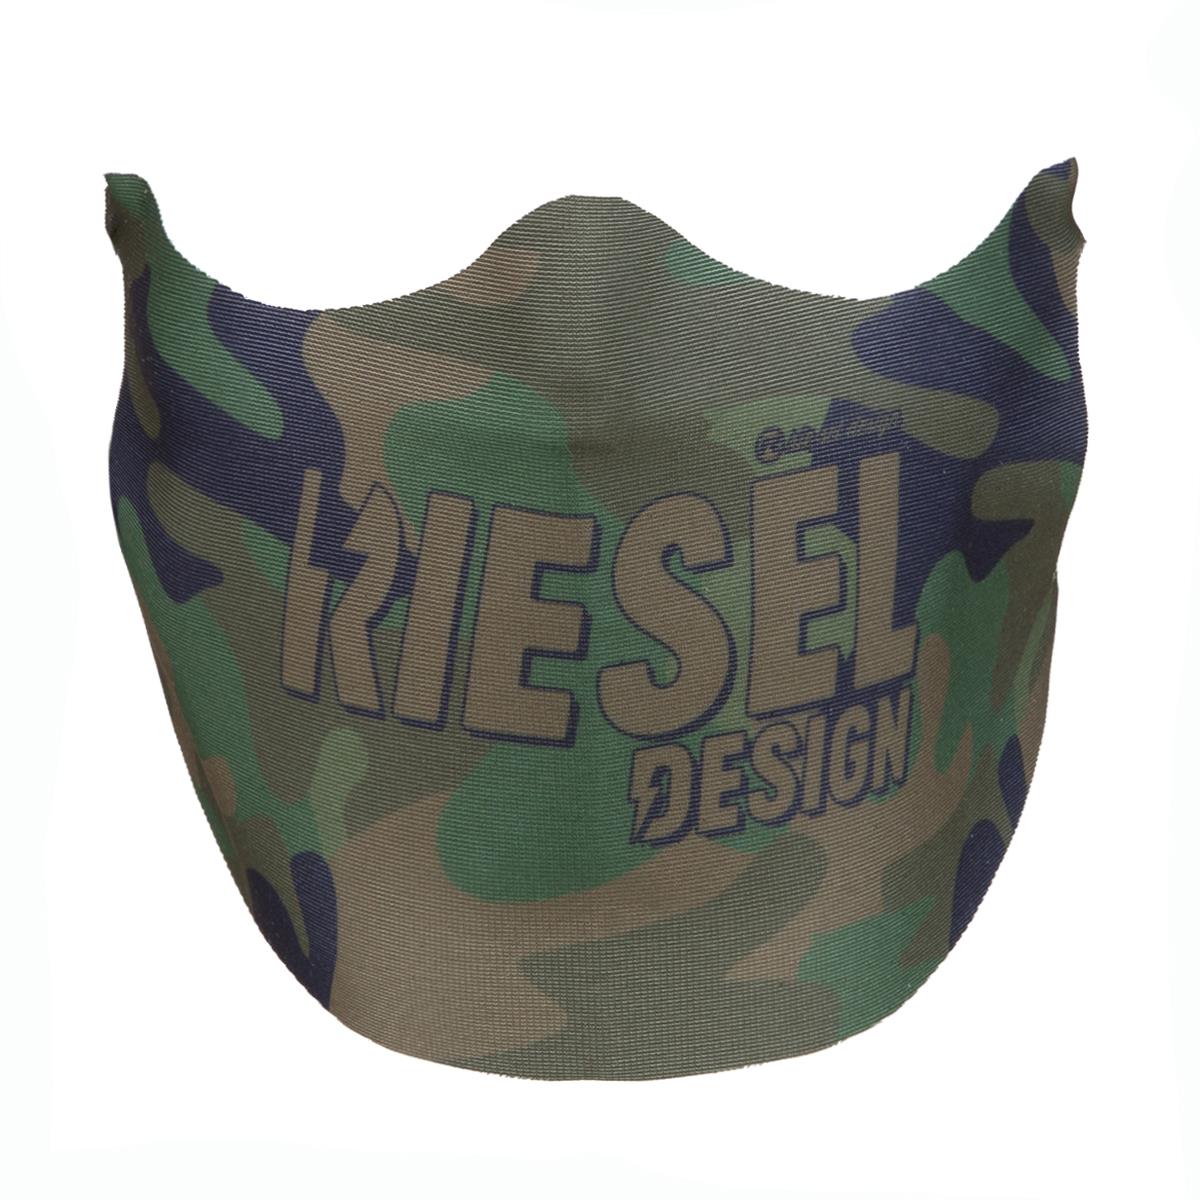 Riesel Design Masque  Camo